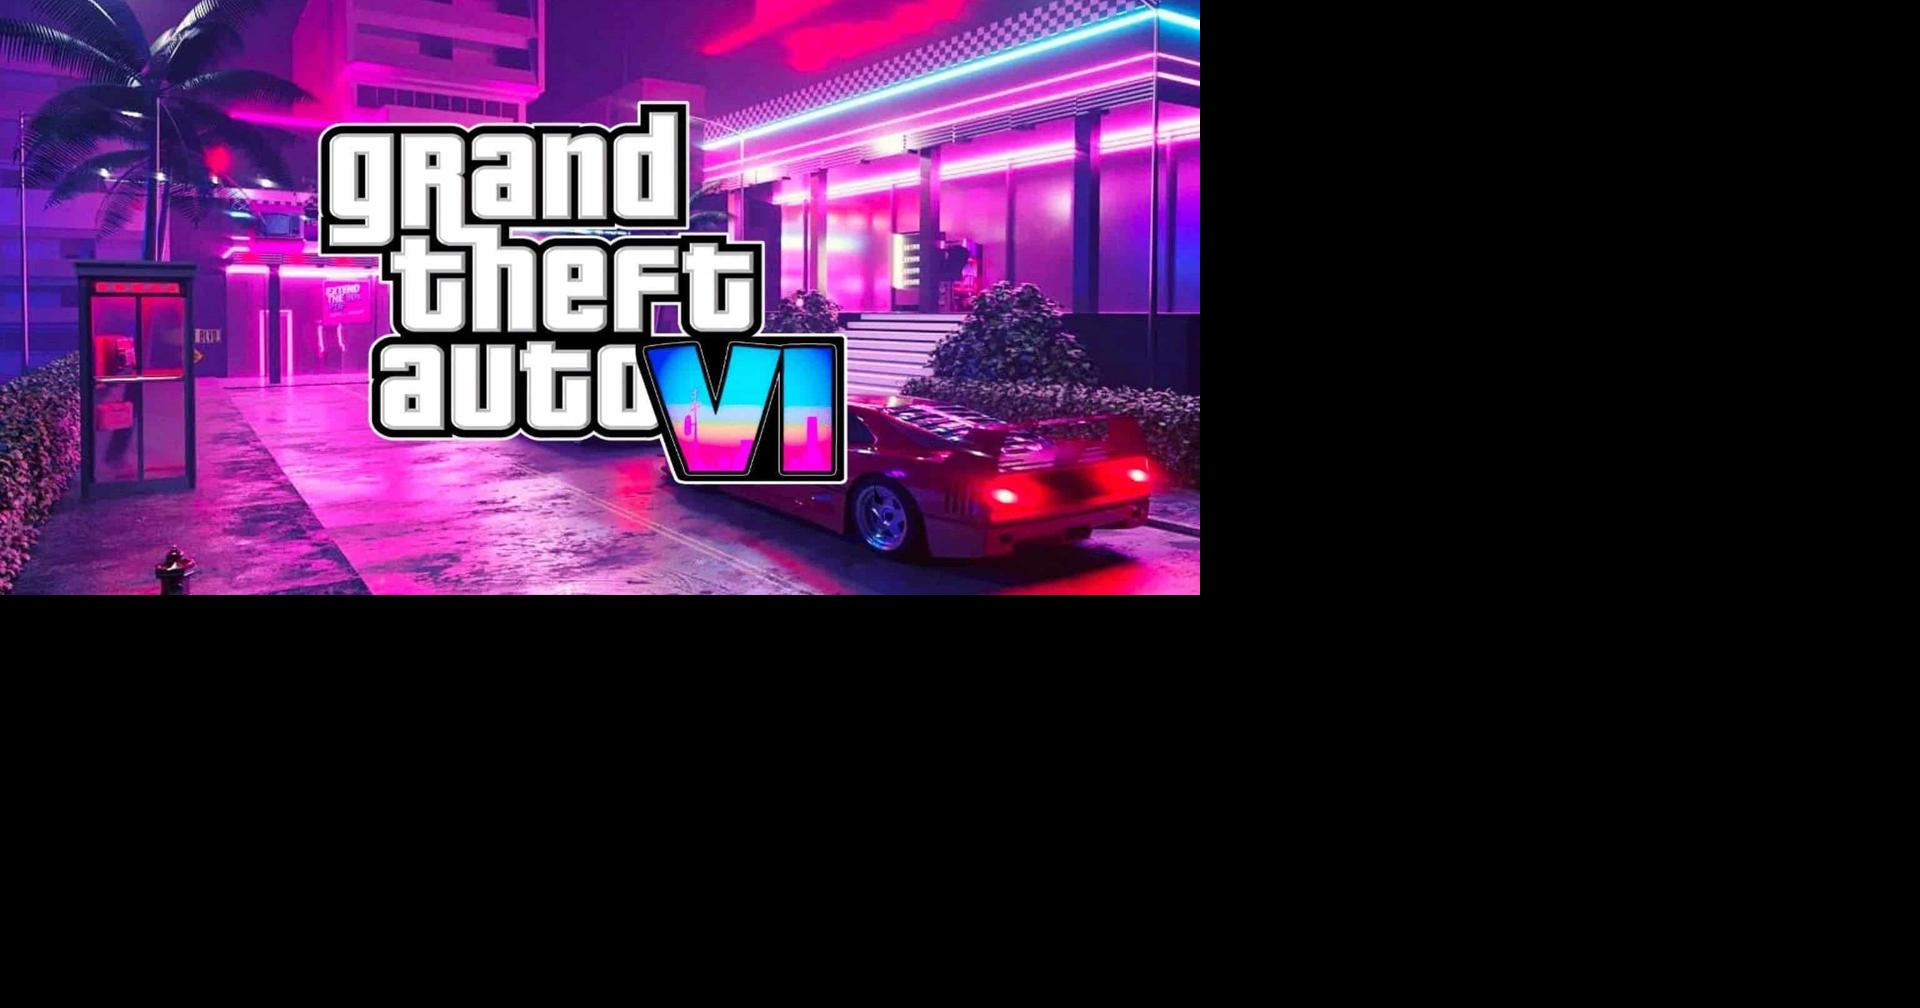 Grand Theft Auto VI Comparisons Highlight Amazing Recreation of